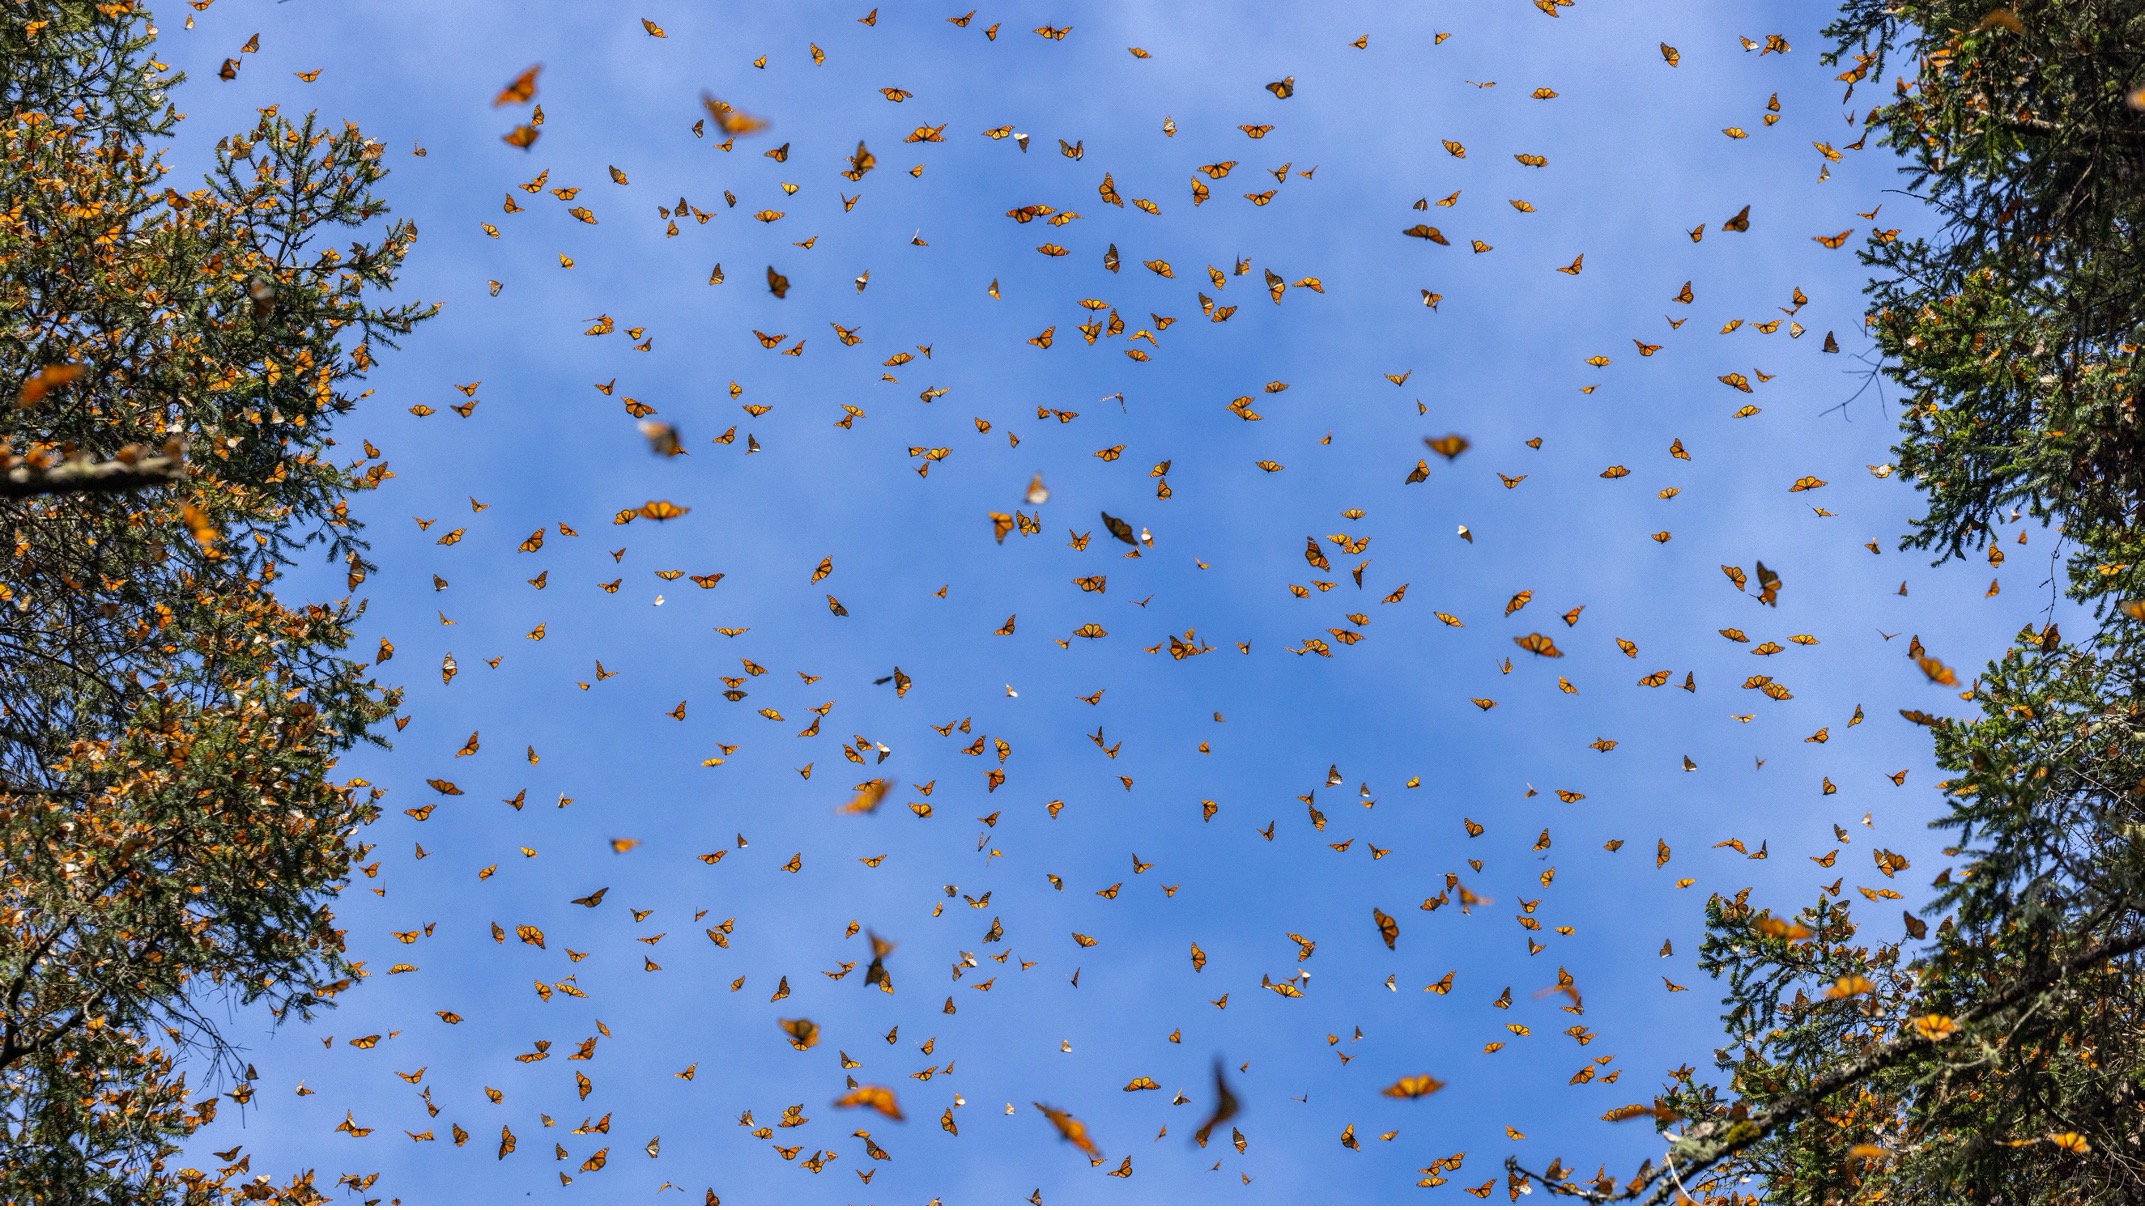 monarch butterflies flying in the trees